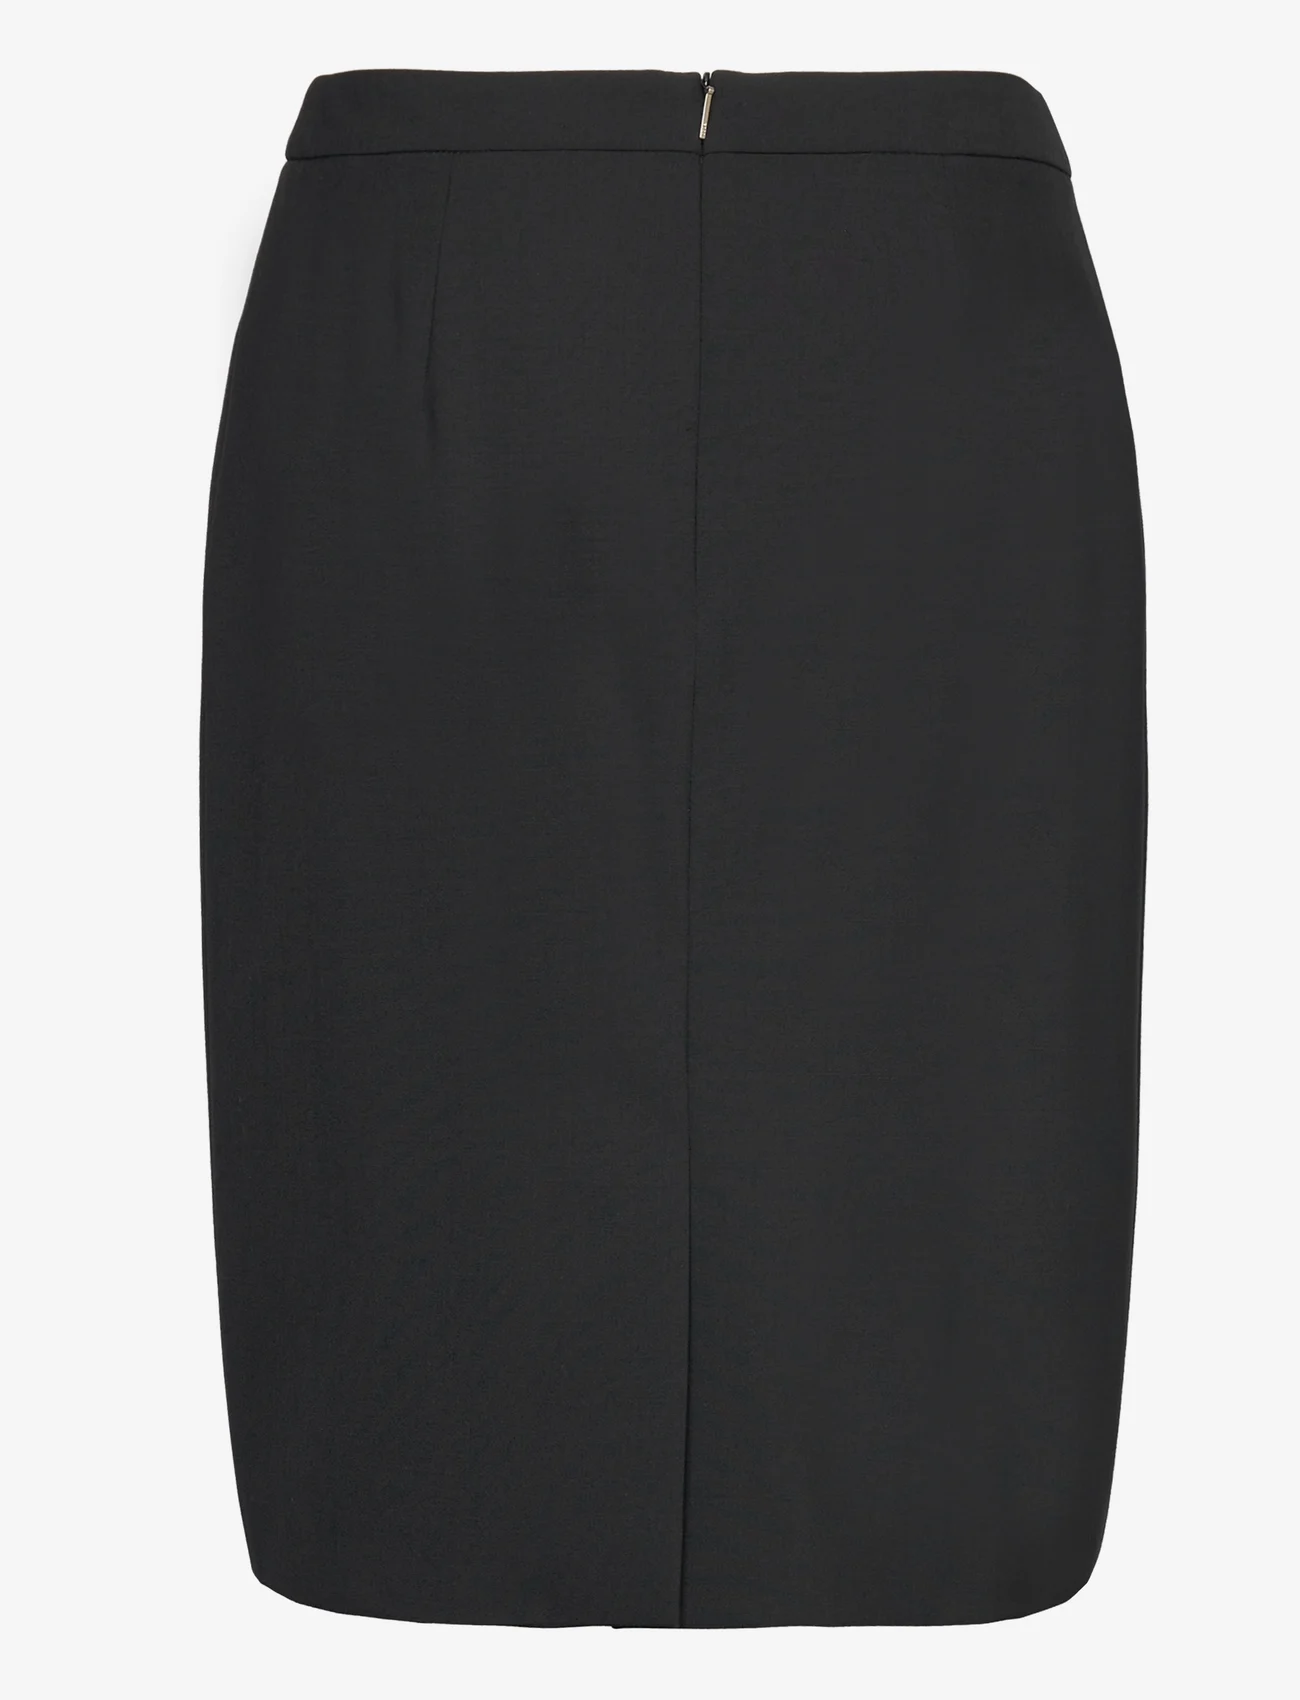 BOSS - Vilea - pencil skirts - black - 1